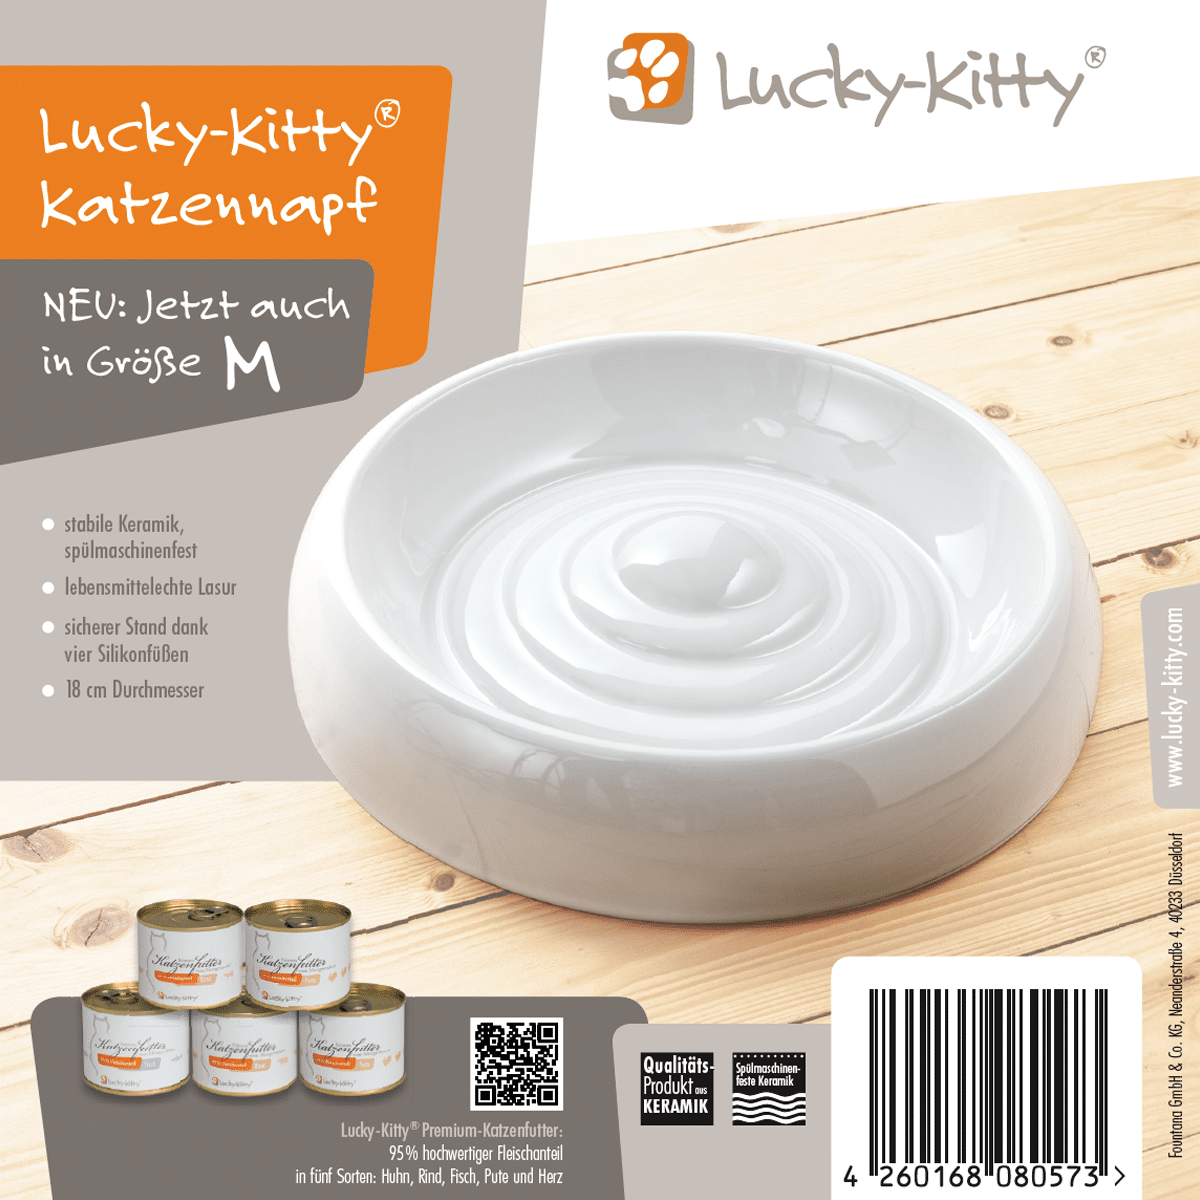 Lucky Kittys kattanpassade skål i storlek medium